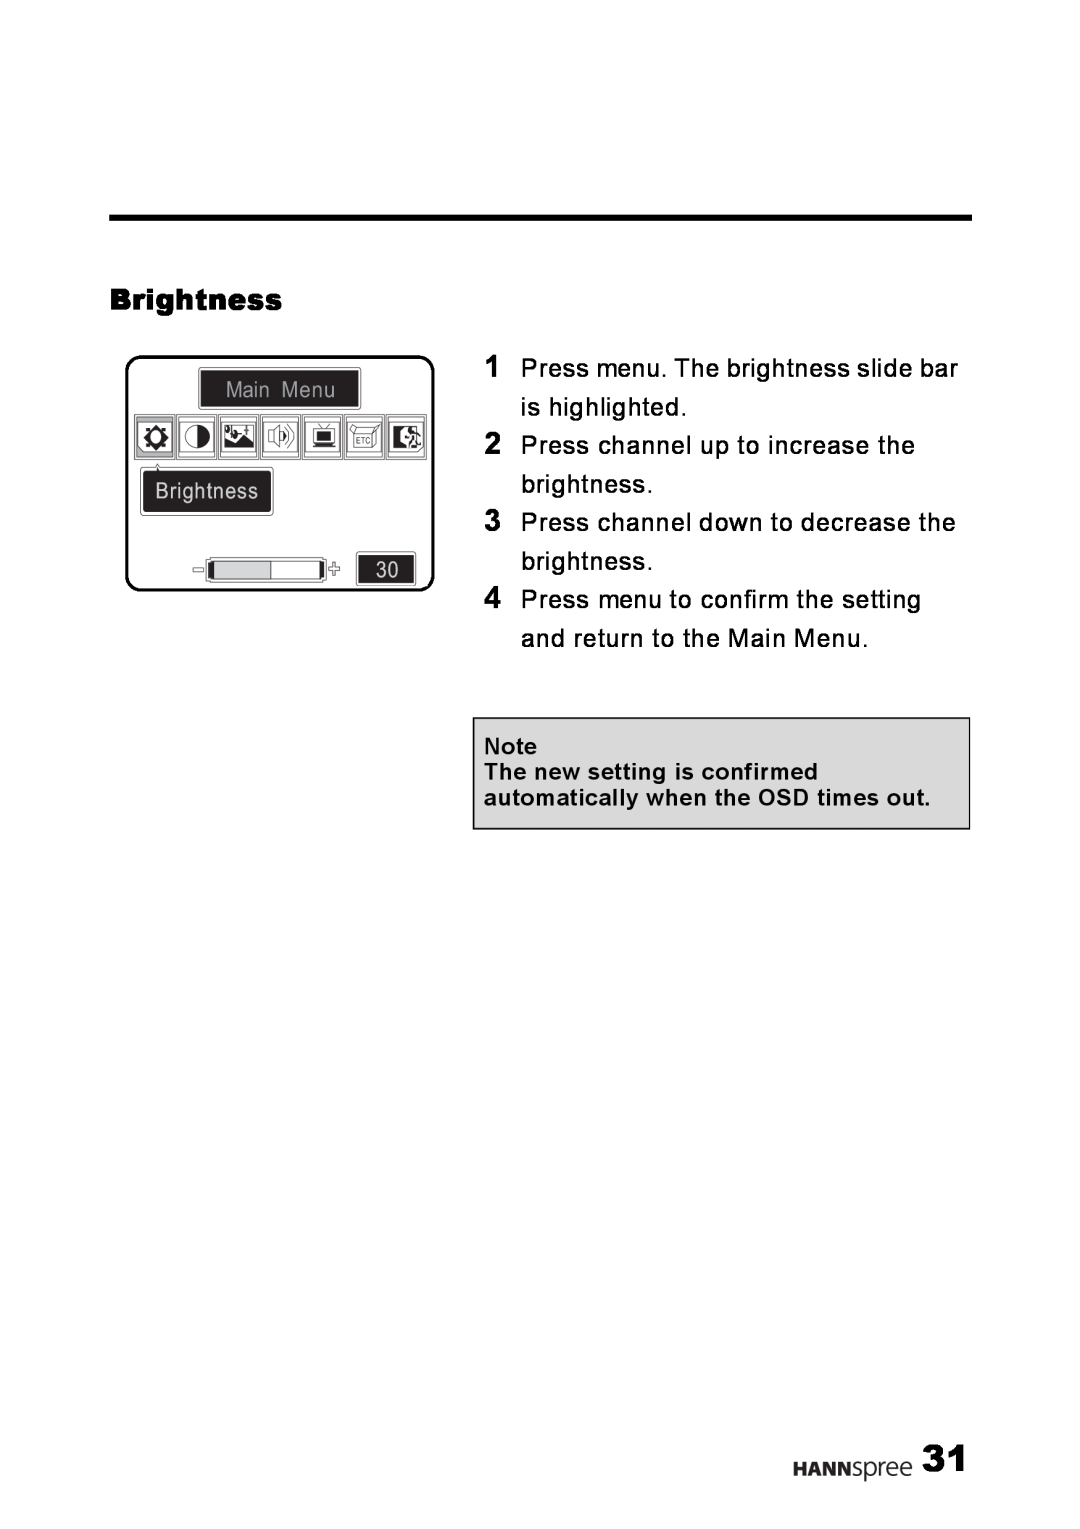 HANNspree LT09-10U1-000 user manual Brightness, Press menu. The brightness slide bar is highlighted, Main Menu 